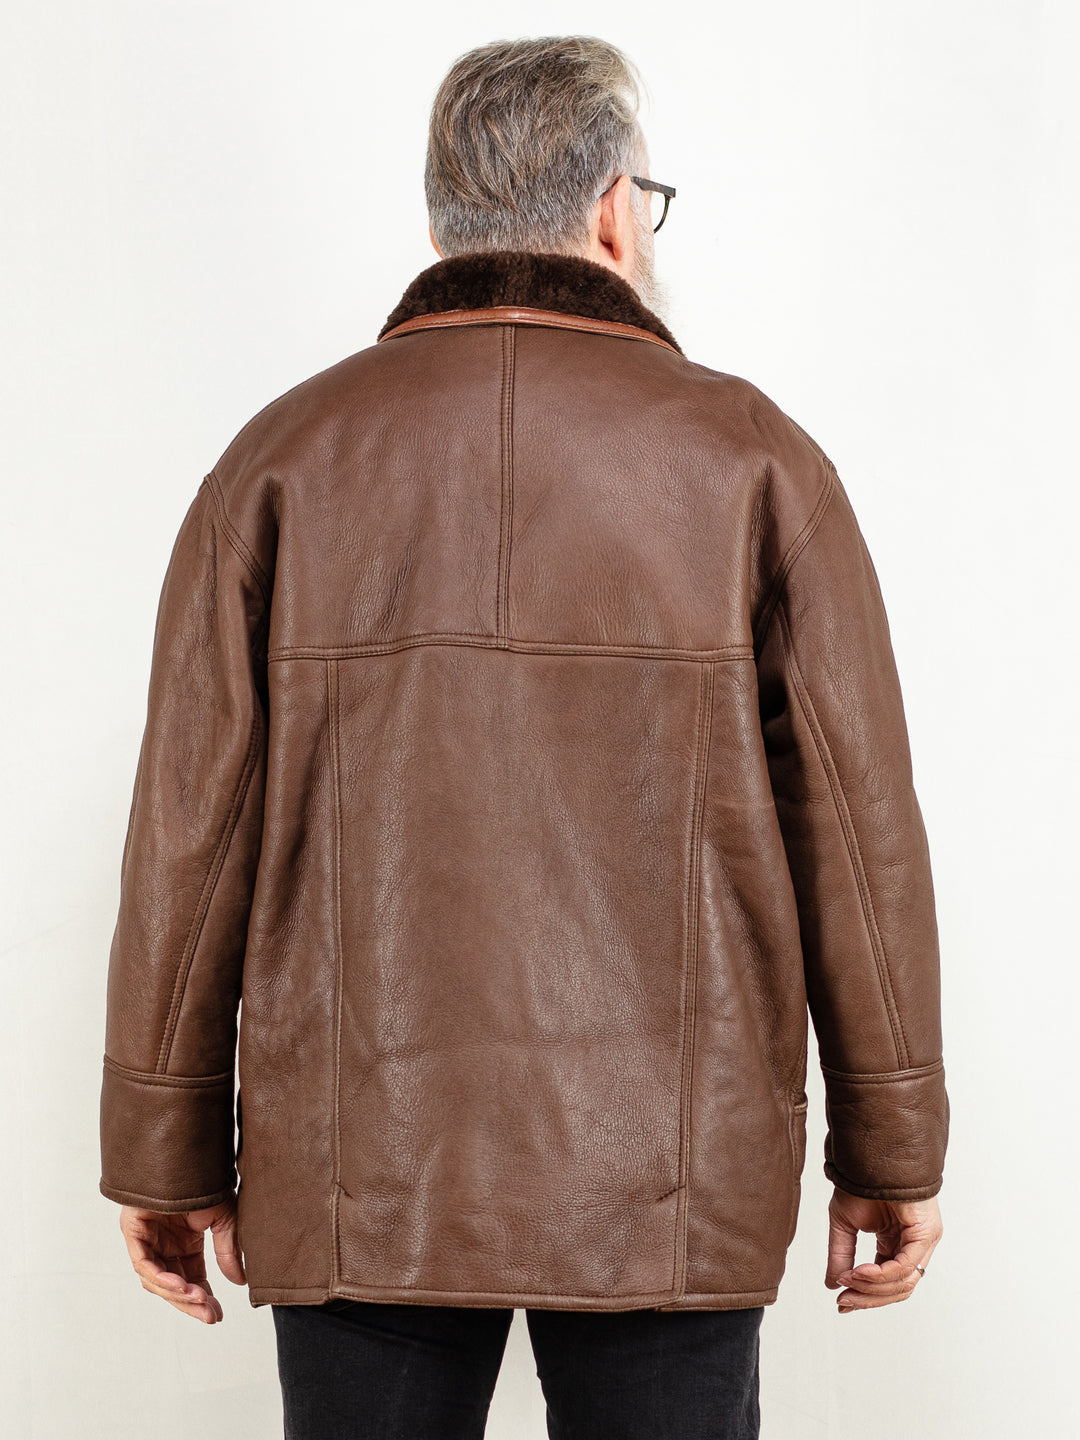 Men Sheepskin Coat vintage 70's brown leather sheepskin coat shearling wool western minimalistic style men vintage clothing size large L